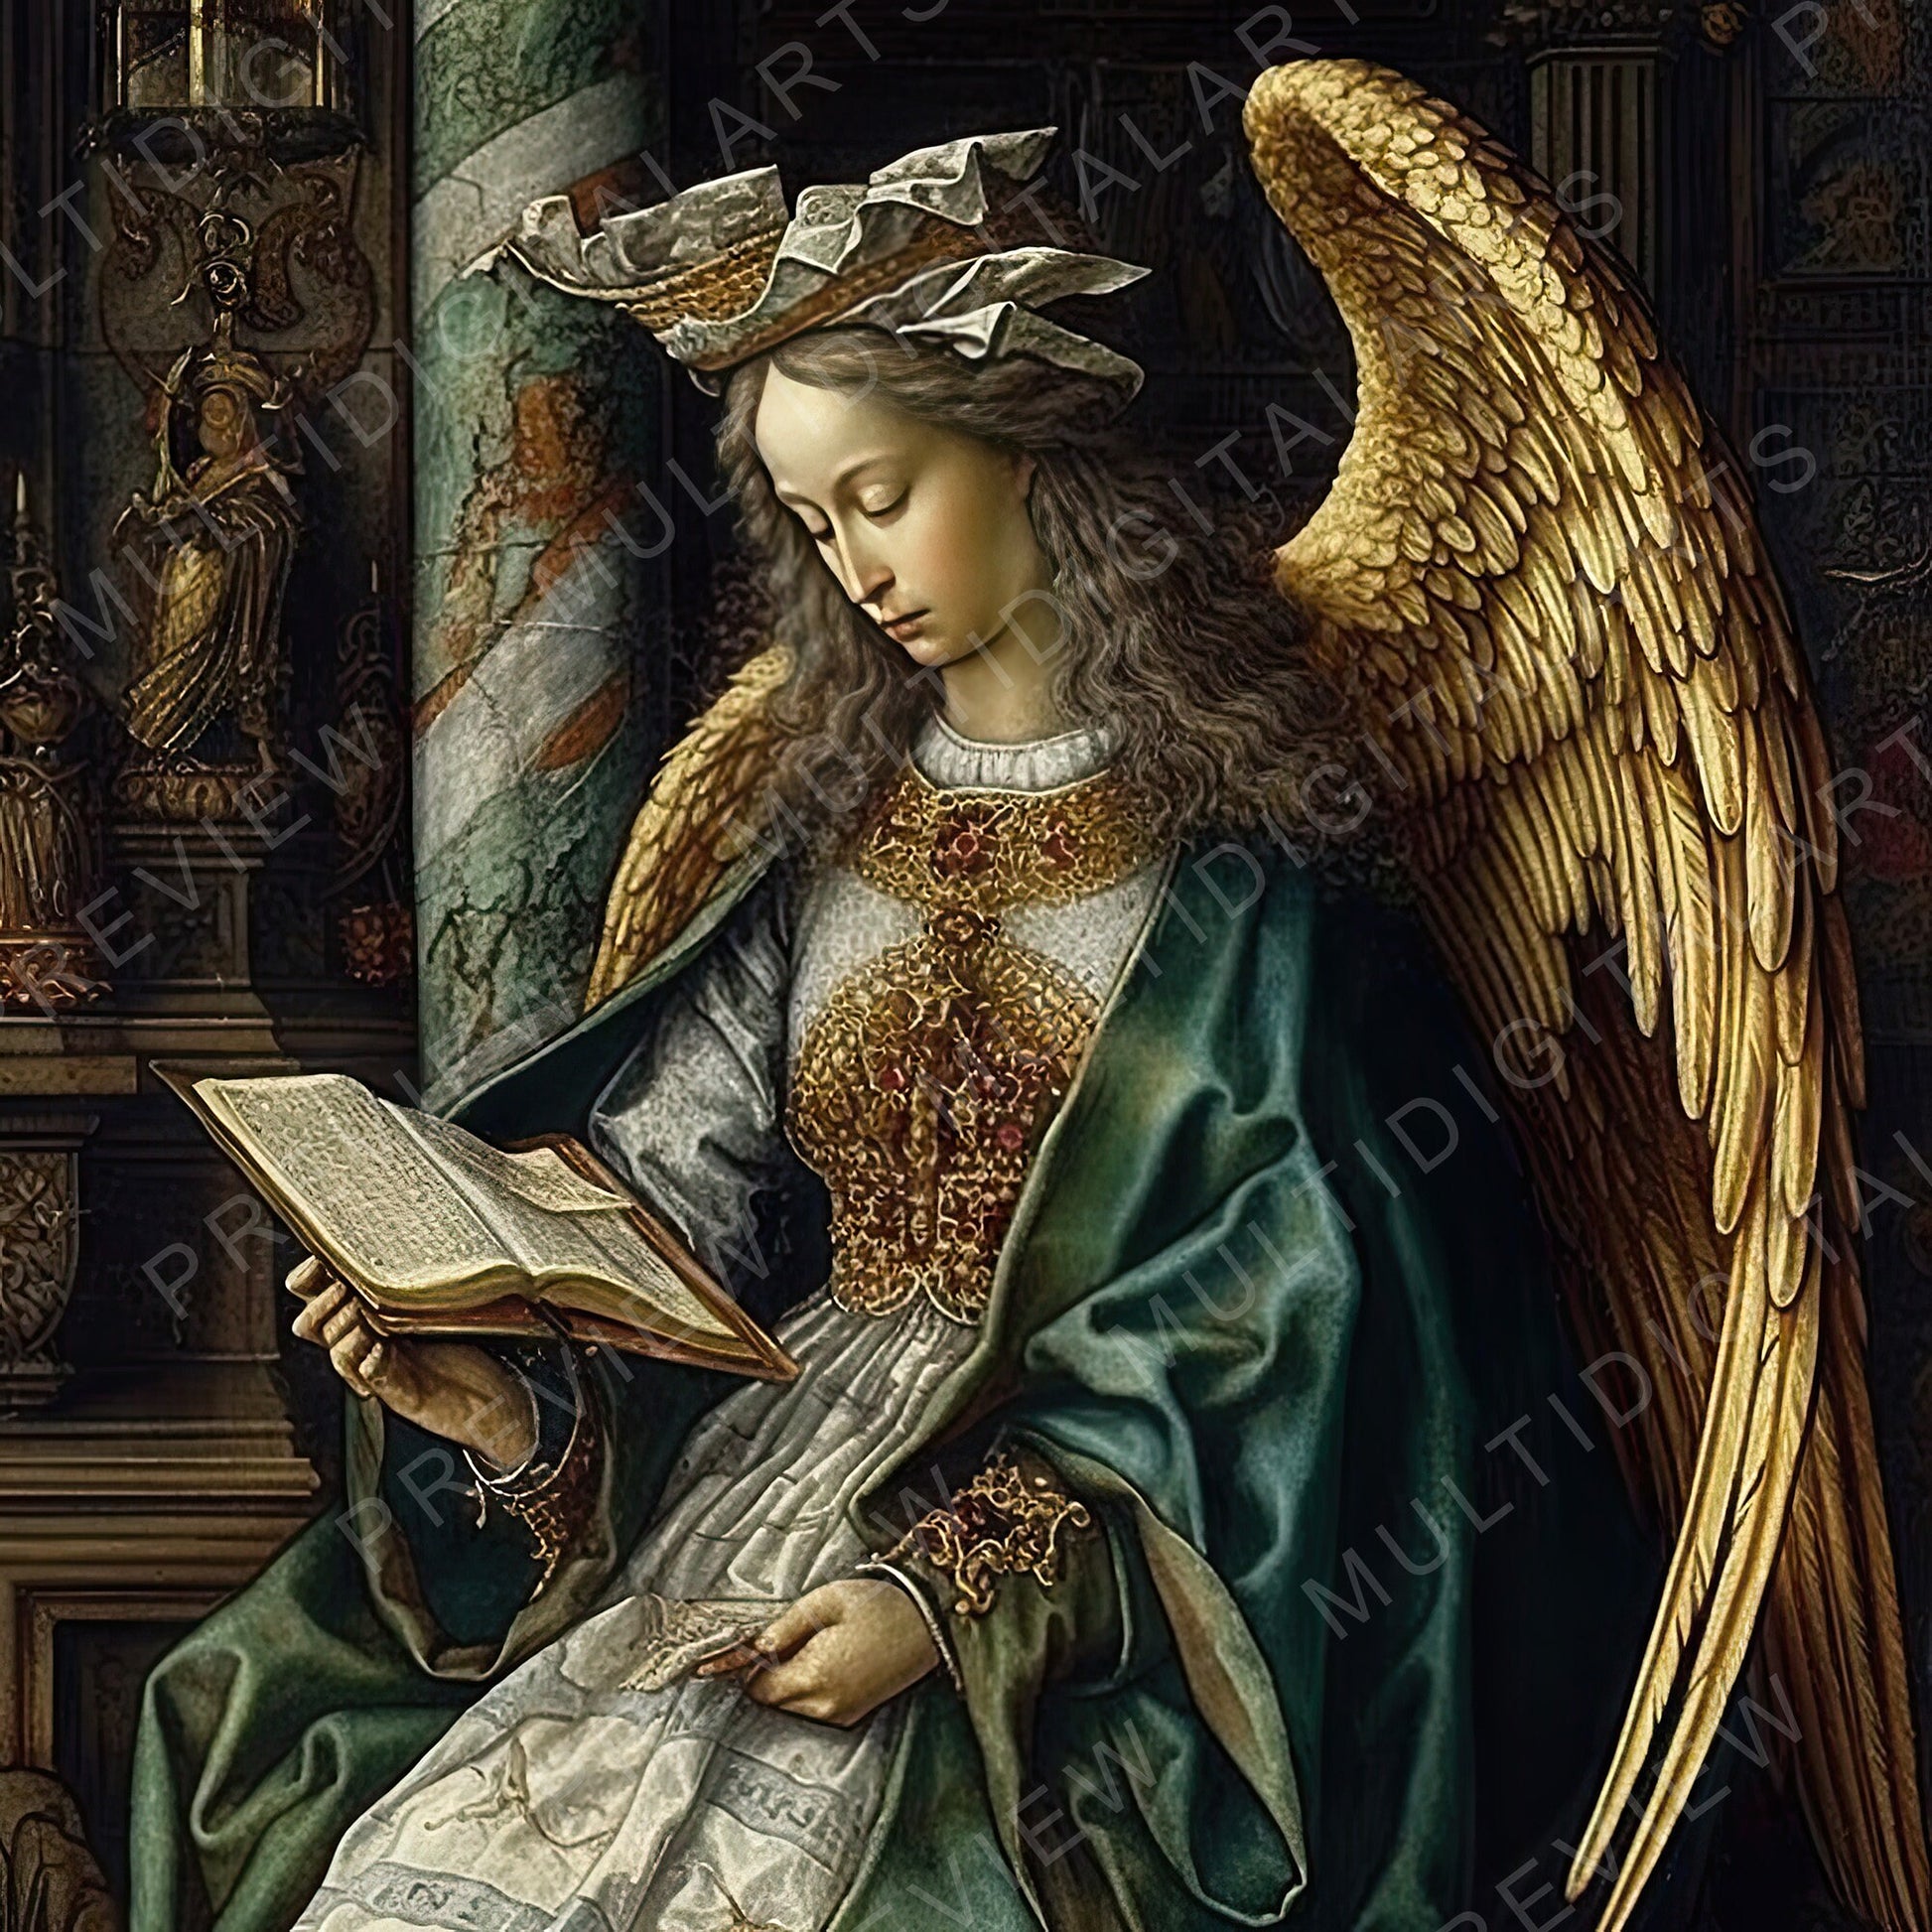 Digital Illustration - Majestic  and Exquisite Archangel  02 - 6144 x 6144 @300DPI